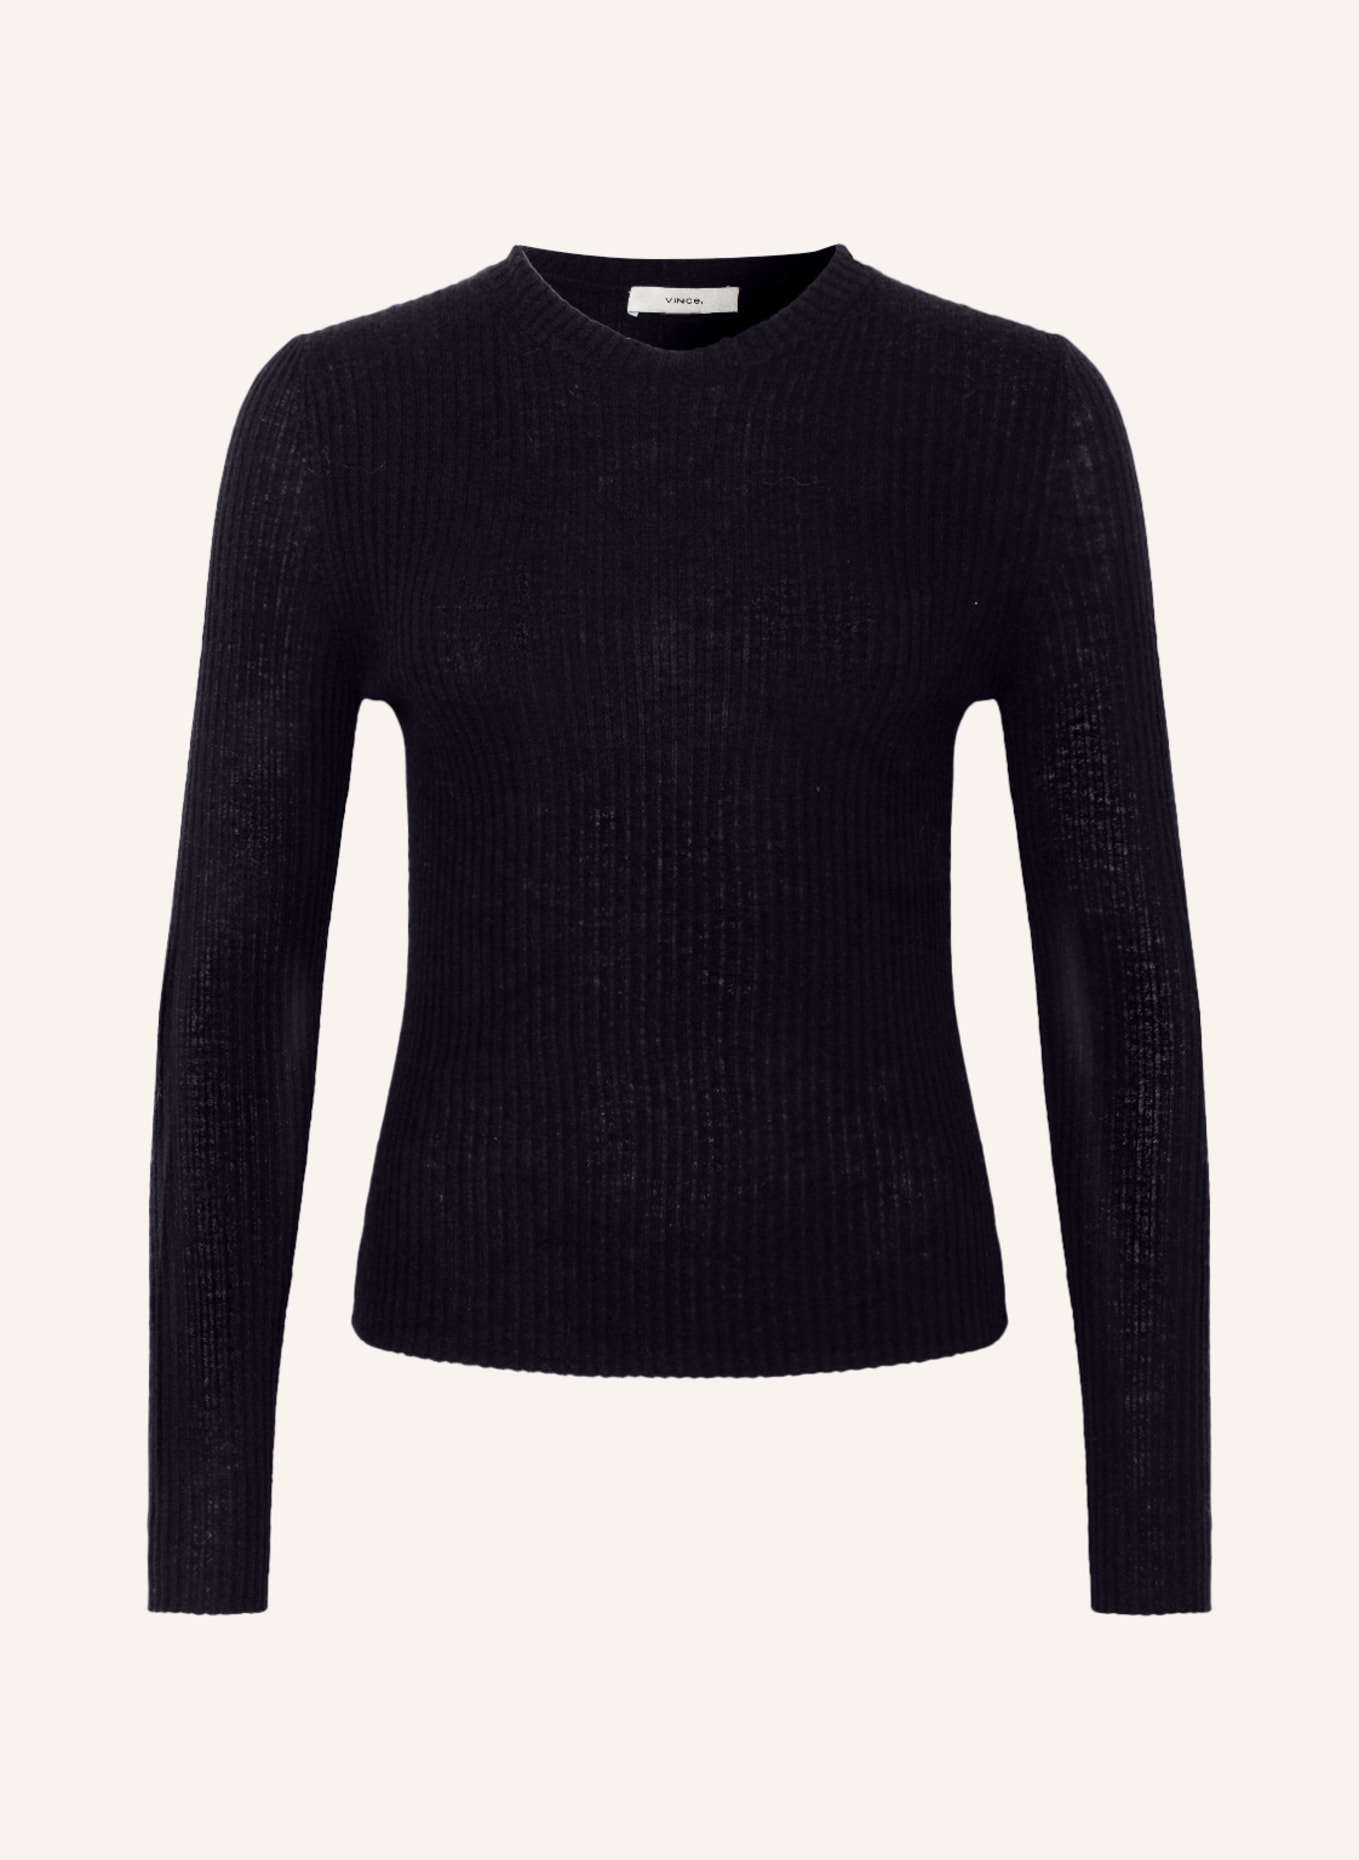 VINCE Cashmere-Pullover mit Seide, Farbe: DUNKELBLAU (Bild 1)